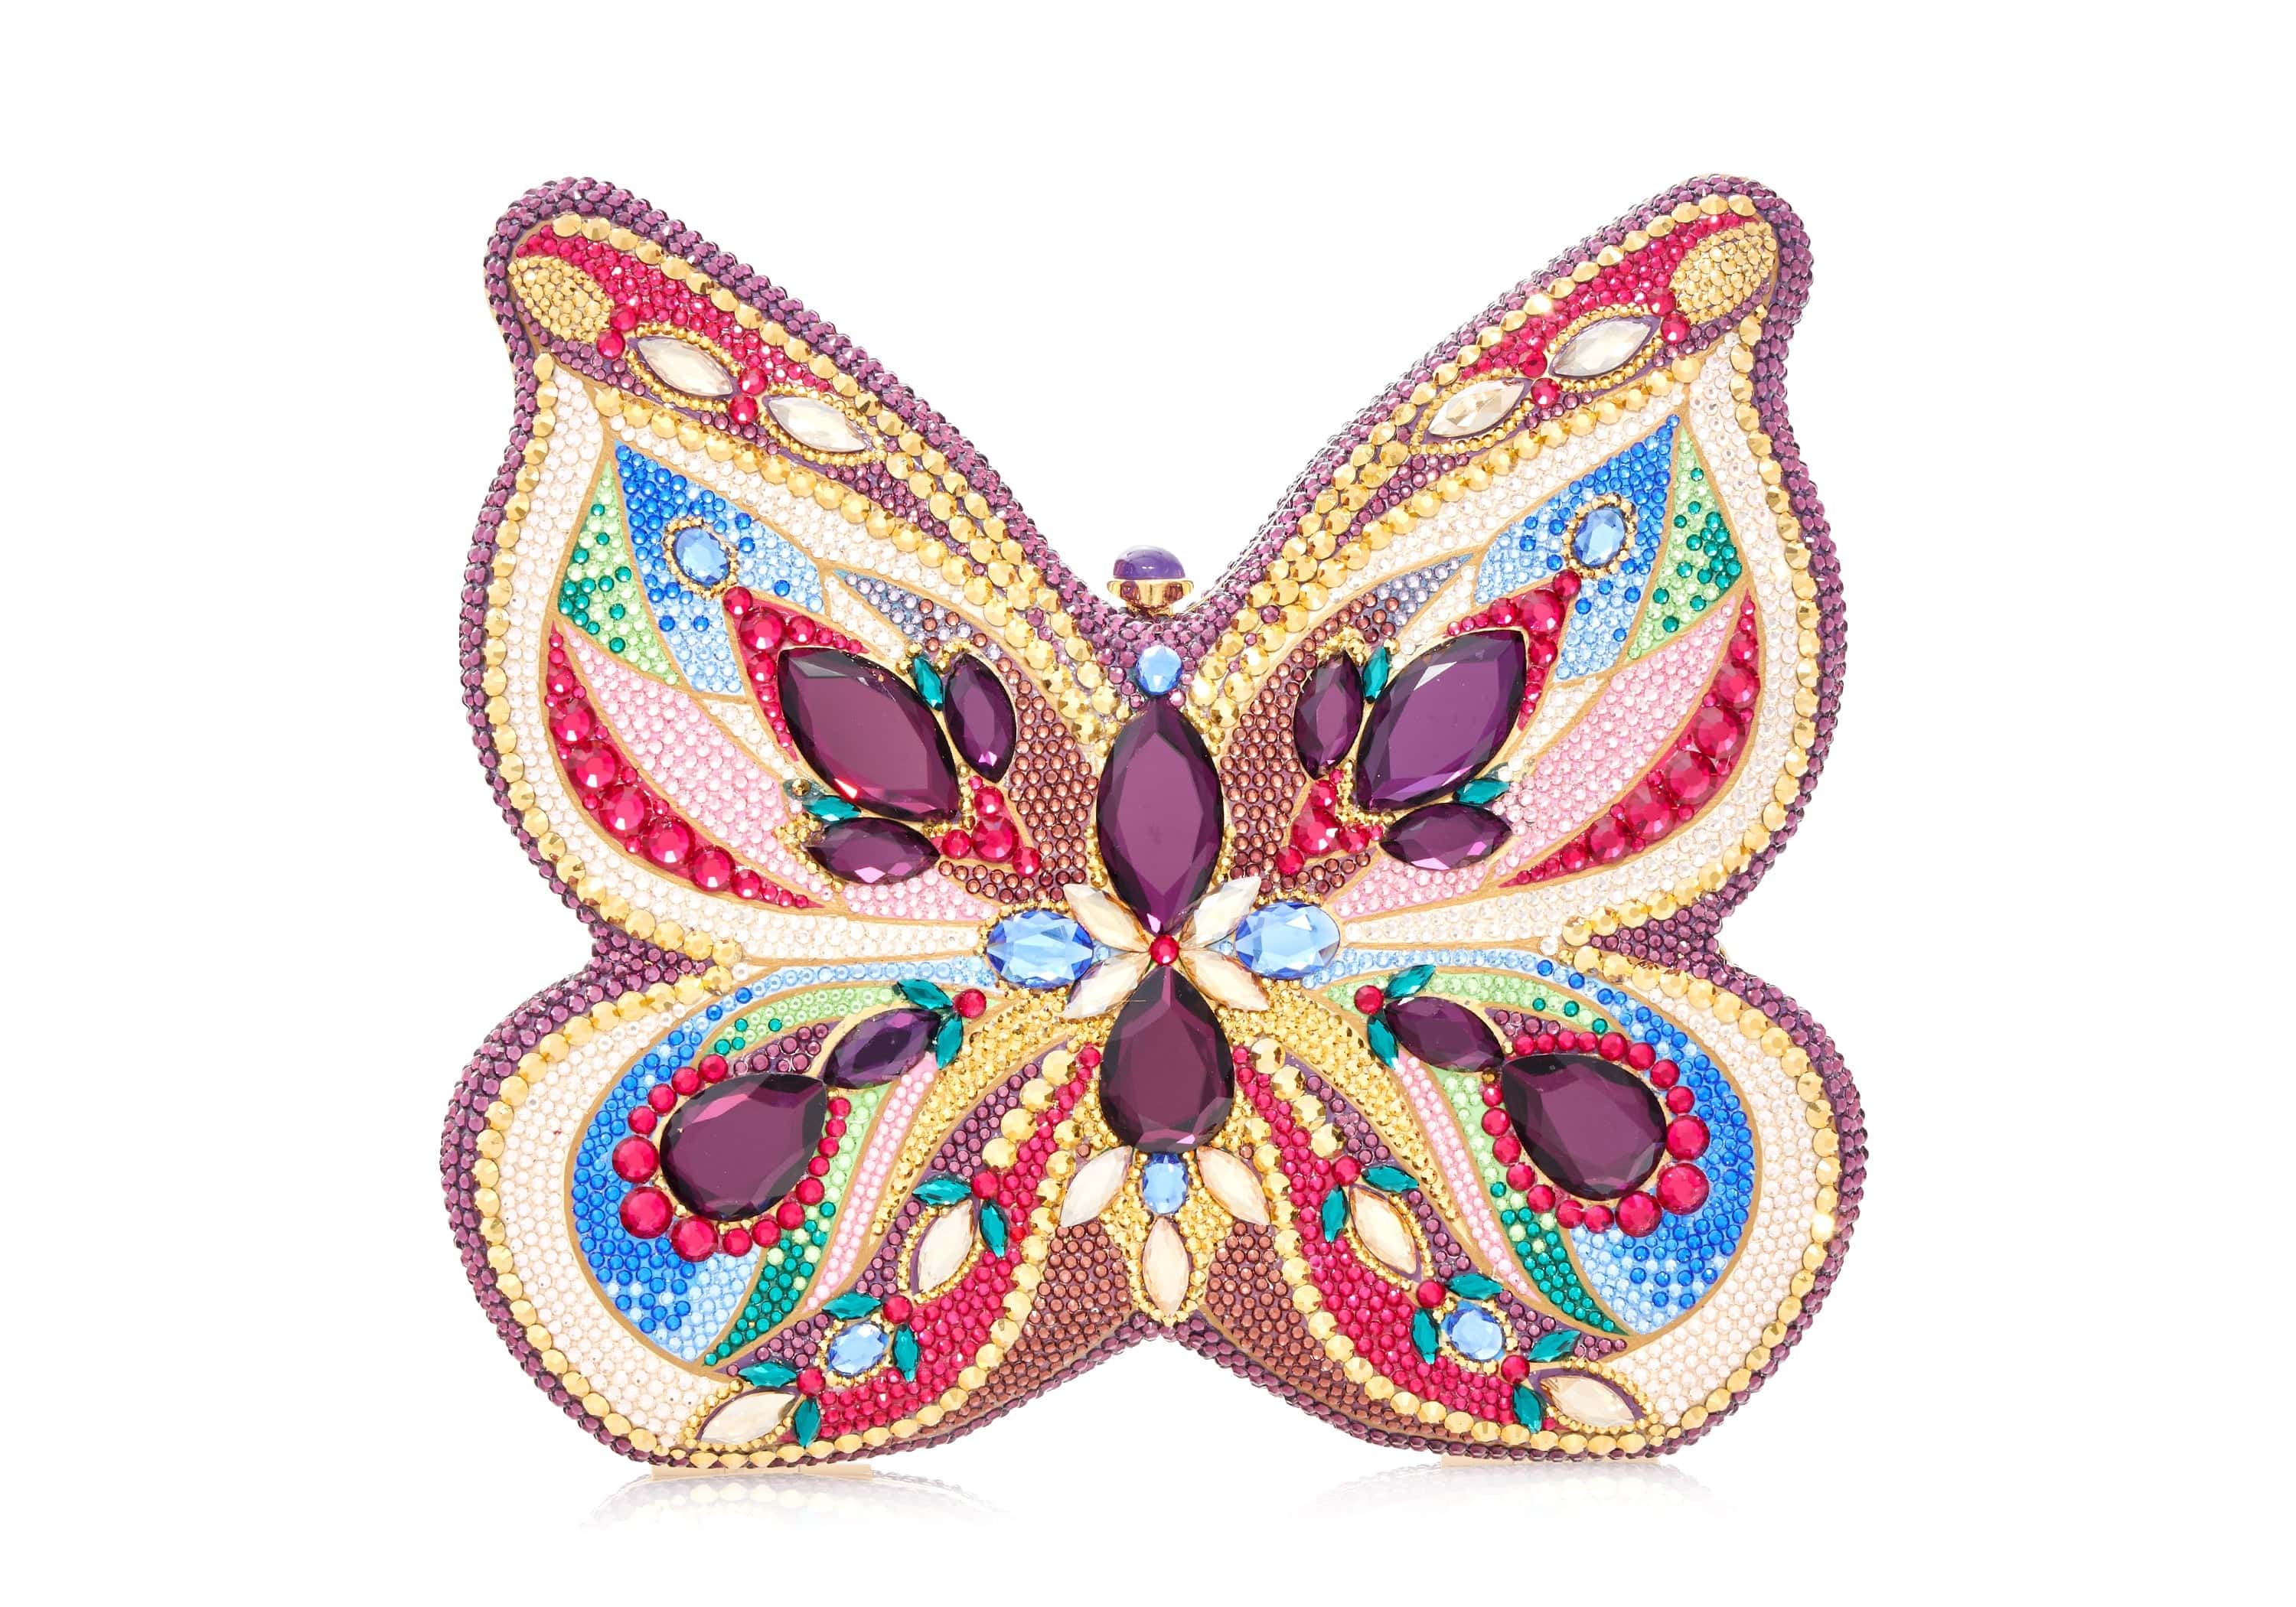 harrods Judith Leiber Embellished Butterfly Clutch Bag | Harrods US |  ShopLook